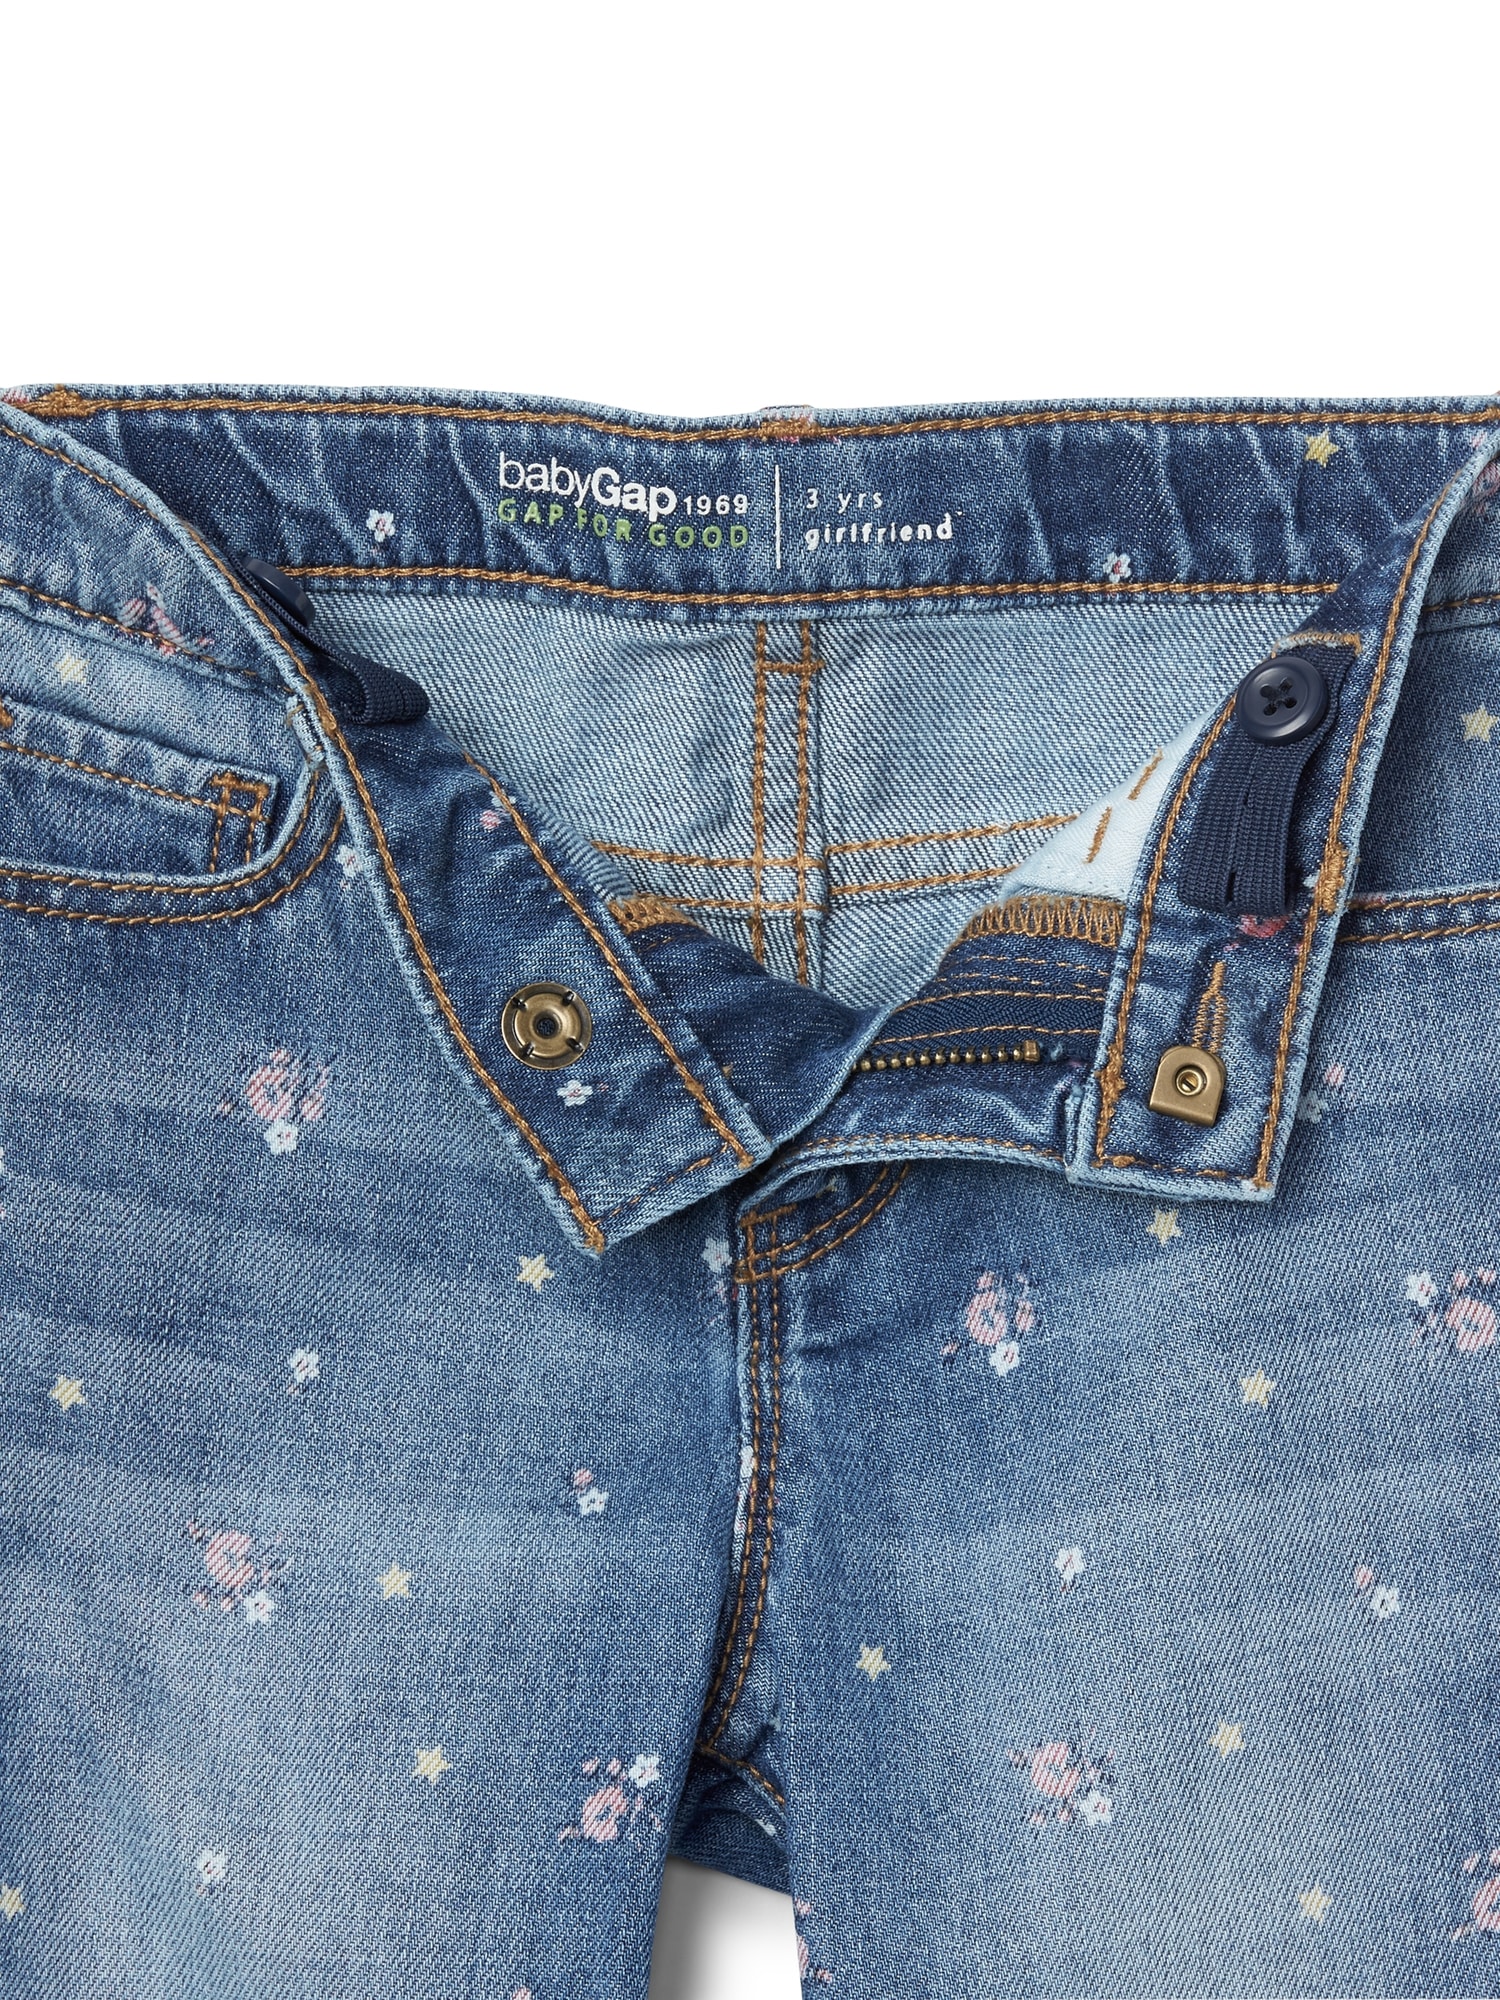 Floral girlfriend jeans | Gap